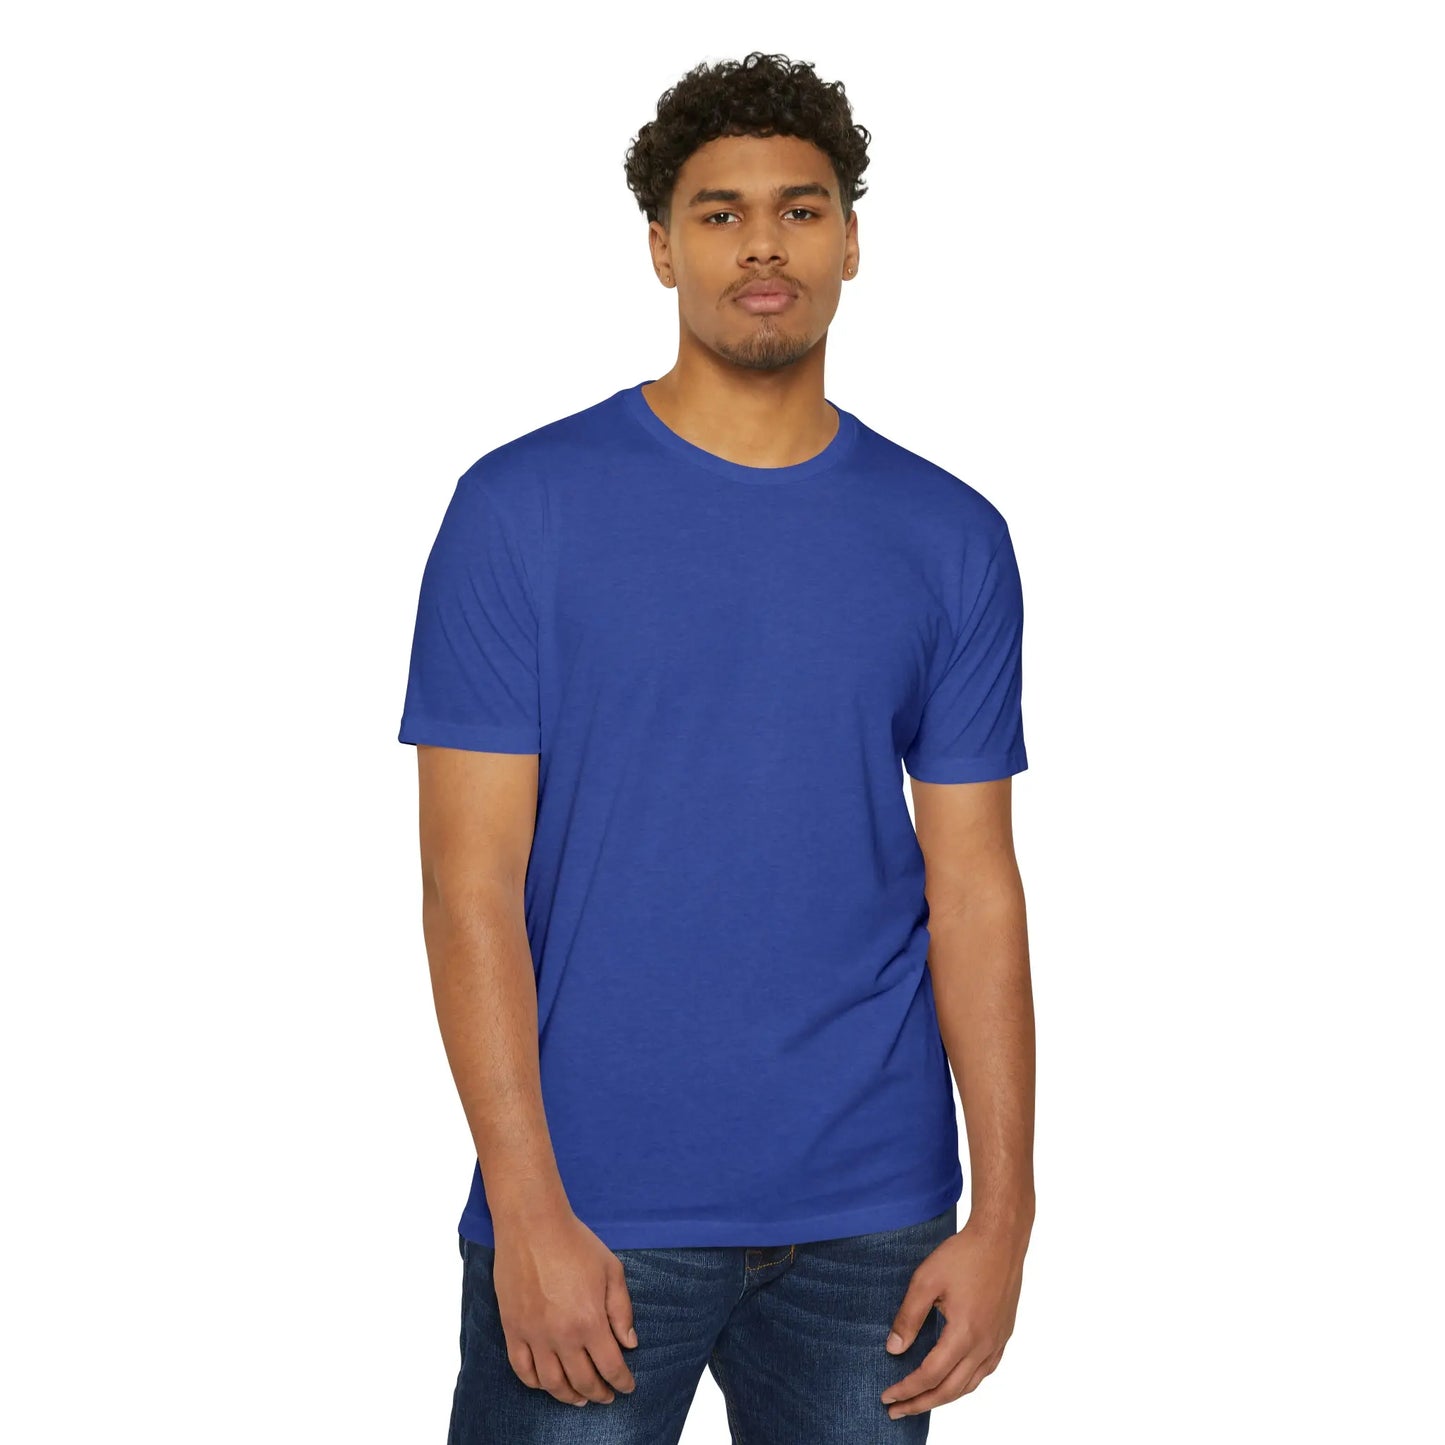 Unisex CVC Jersey T-shirt BE - An Initial Impression